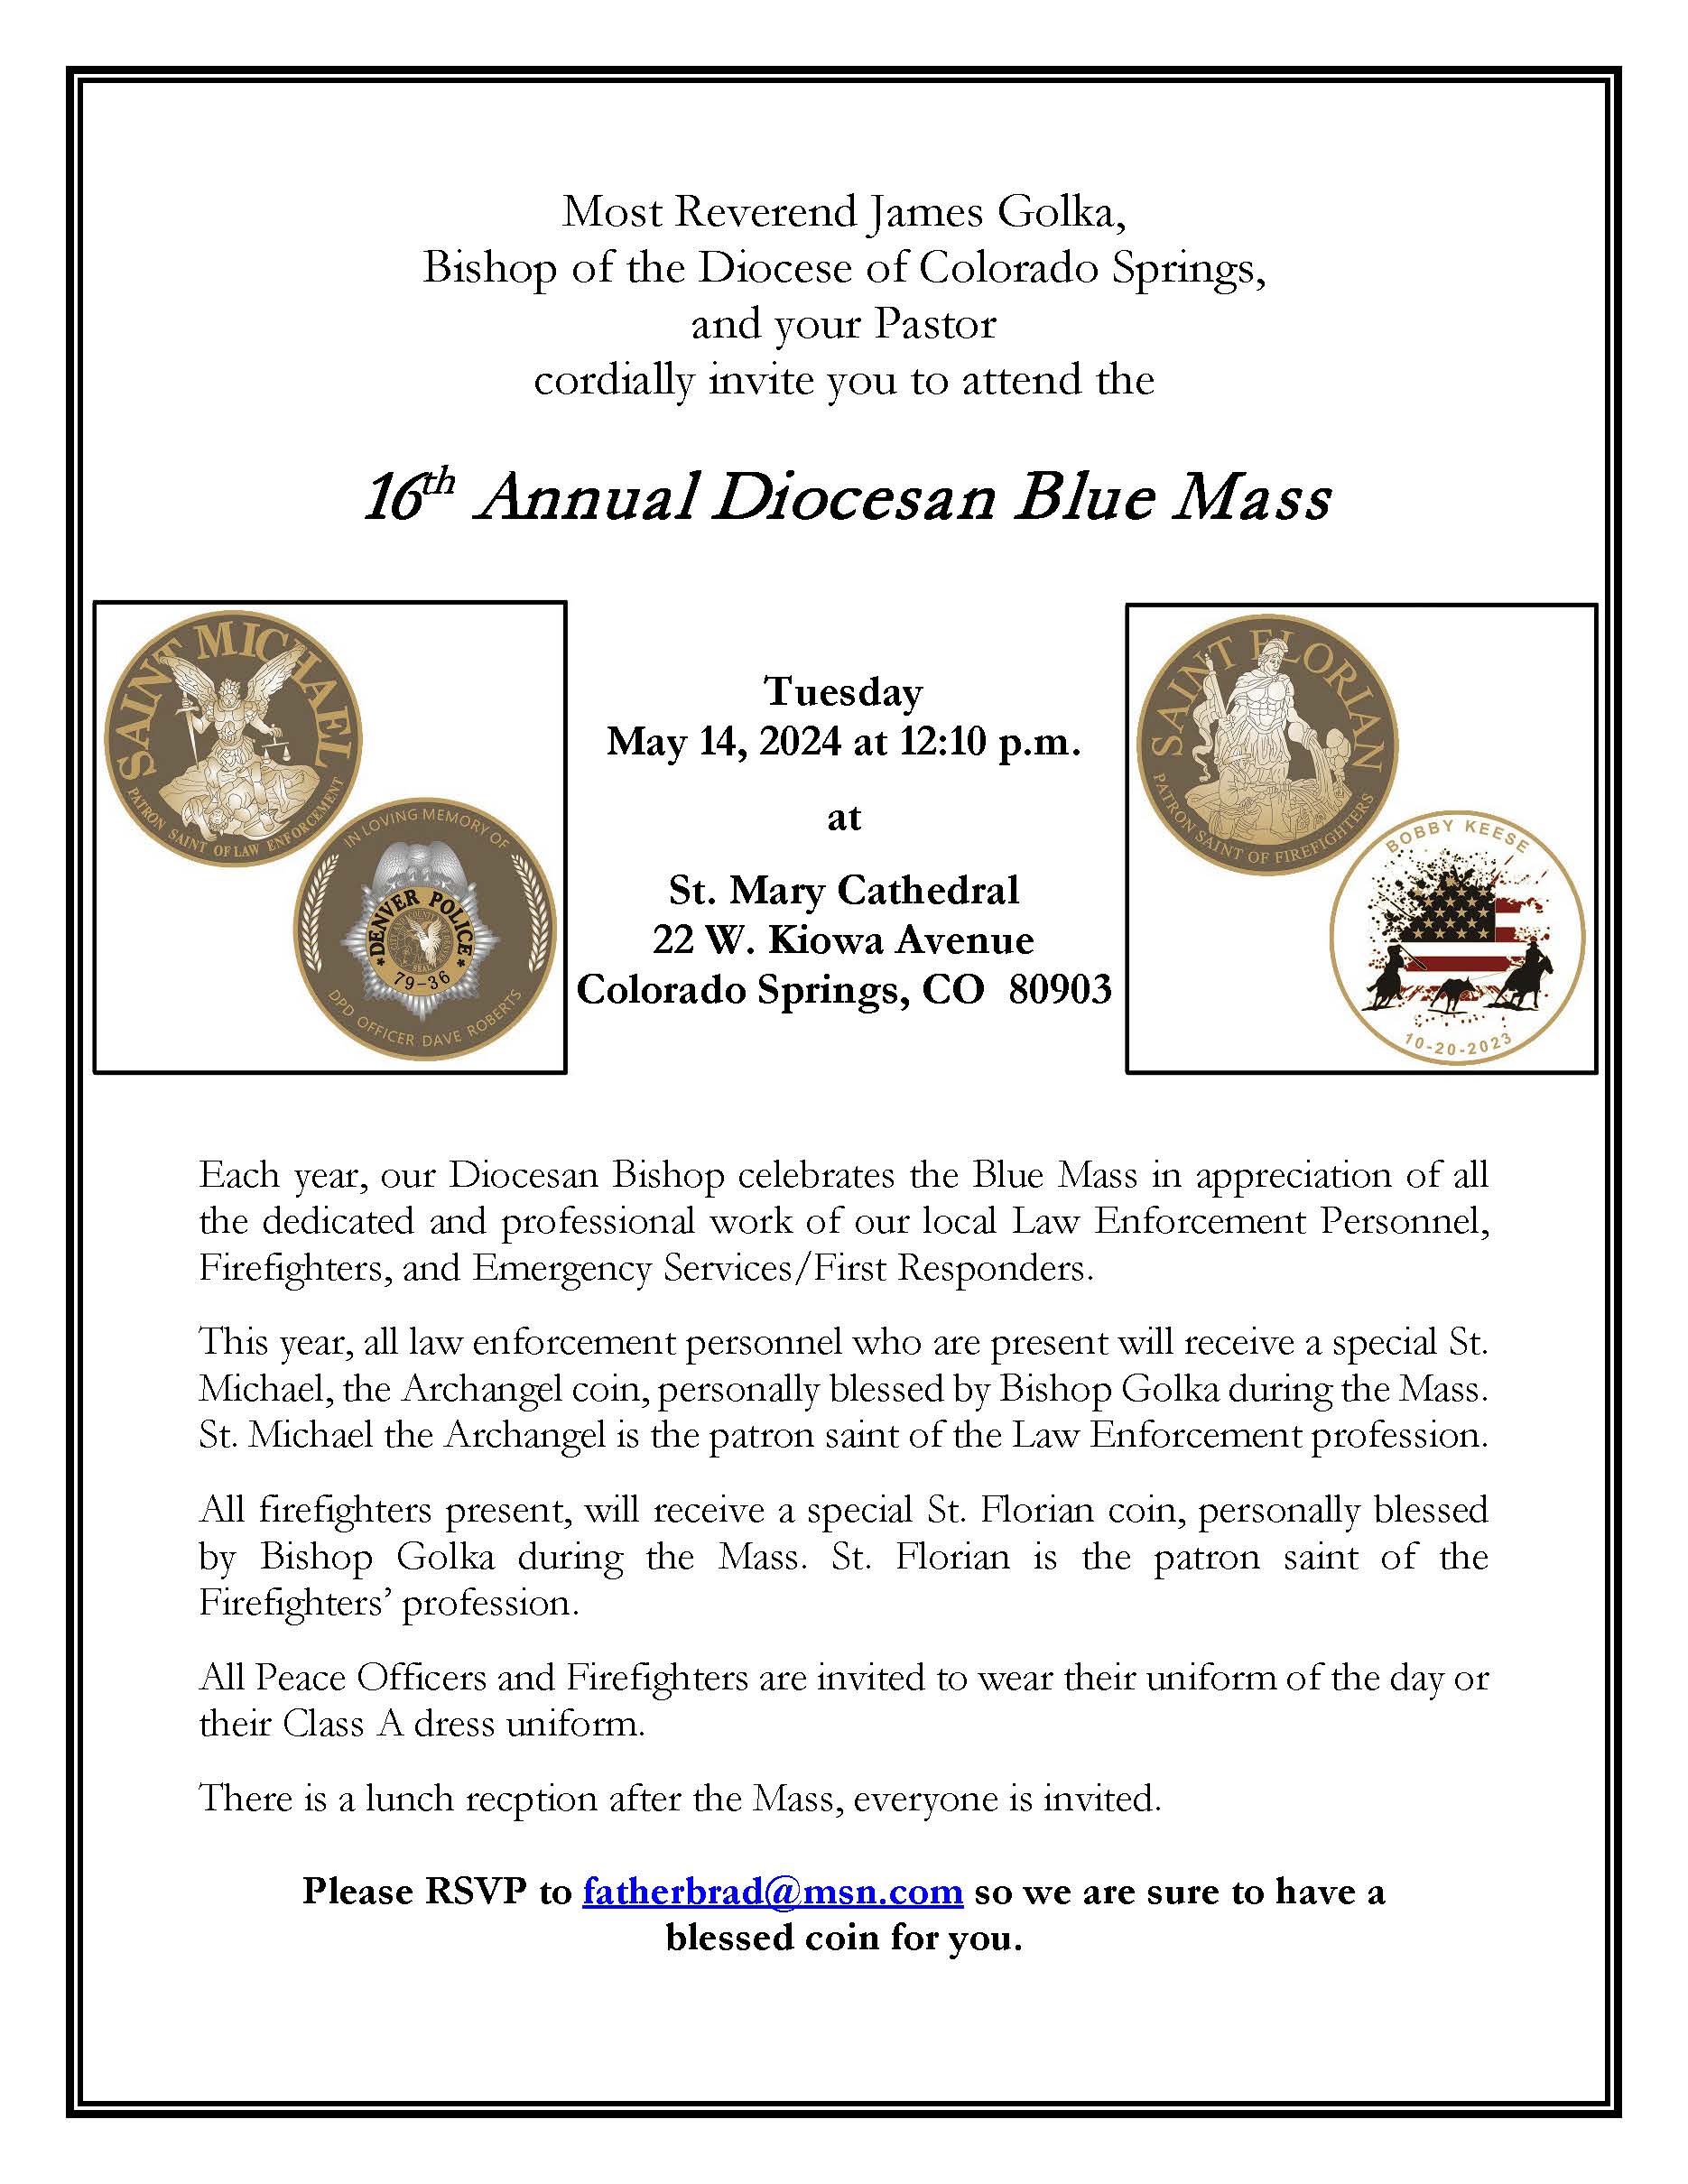 16th Annual Diocesan Blue Mass